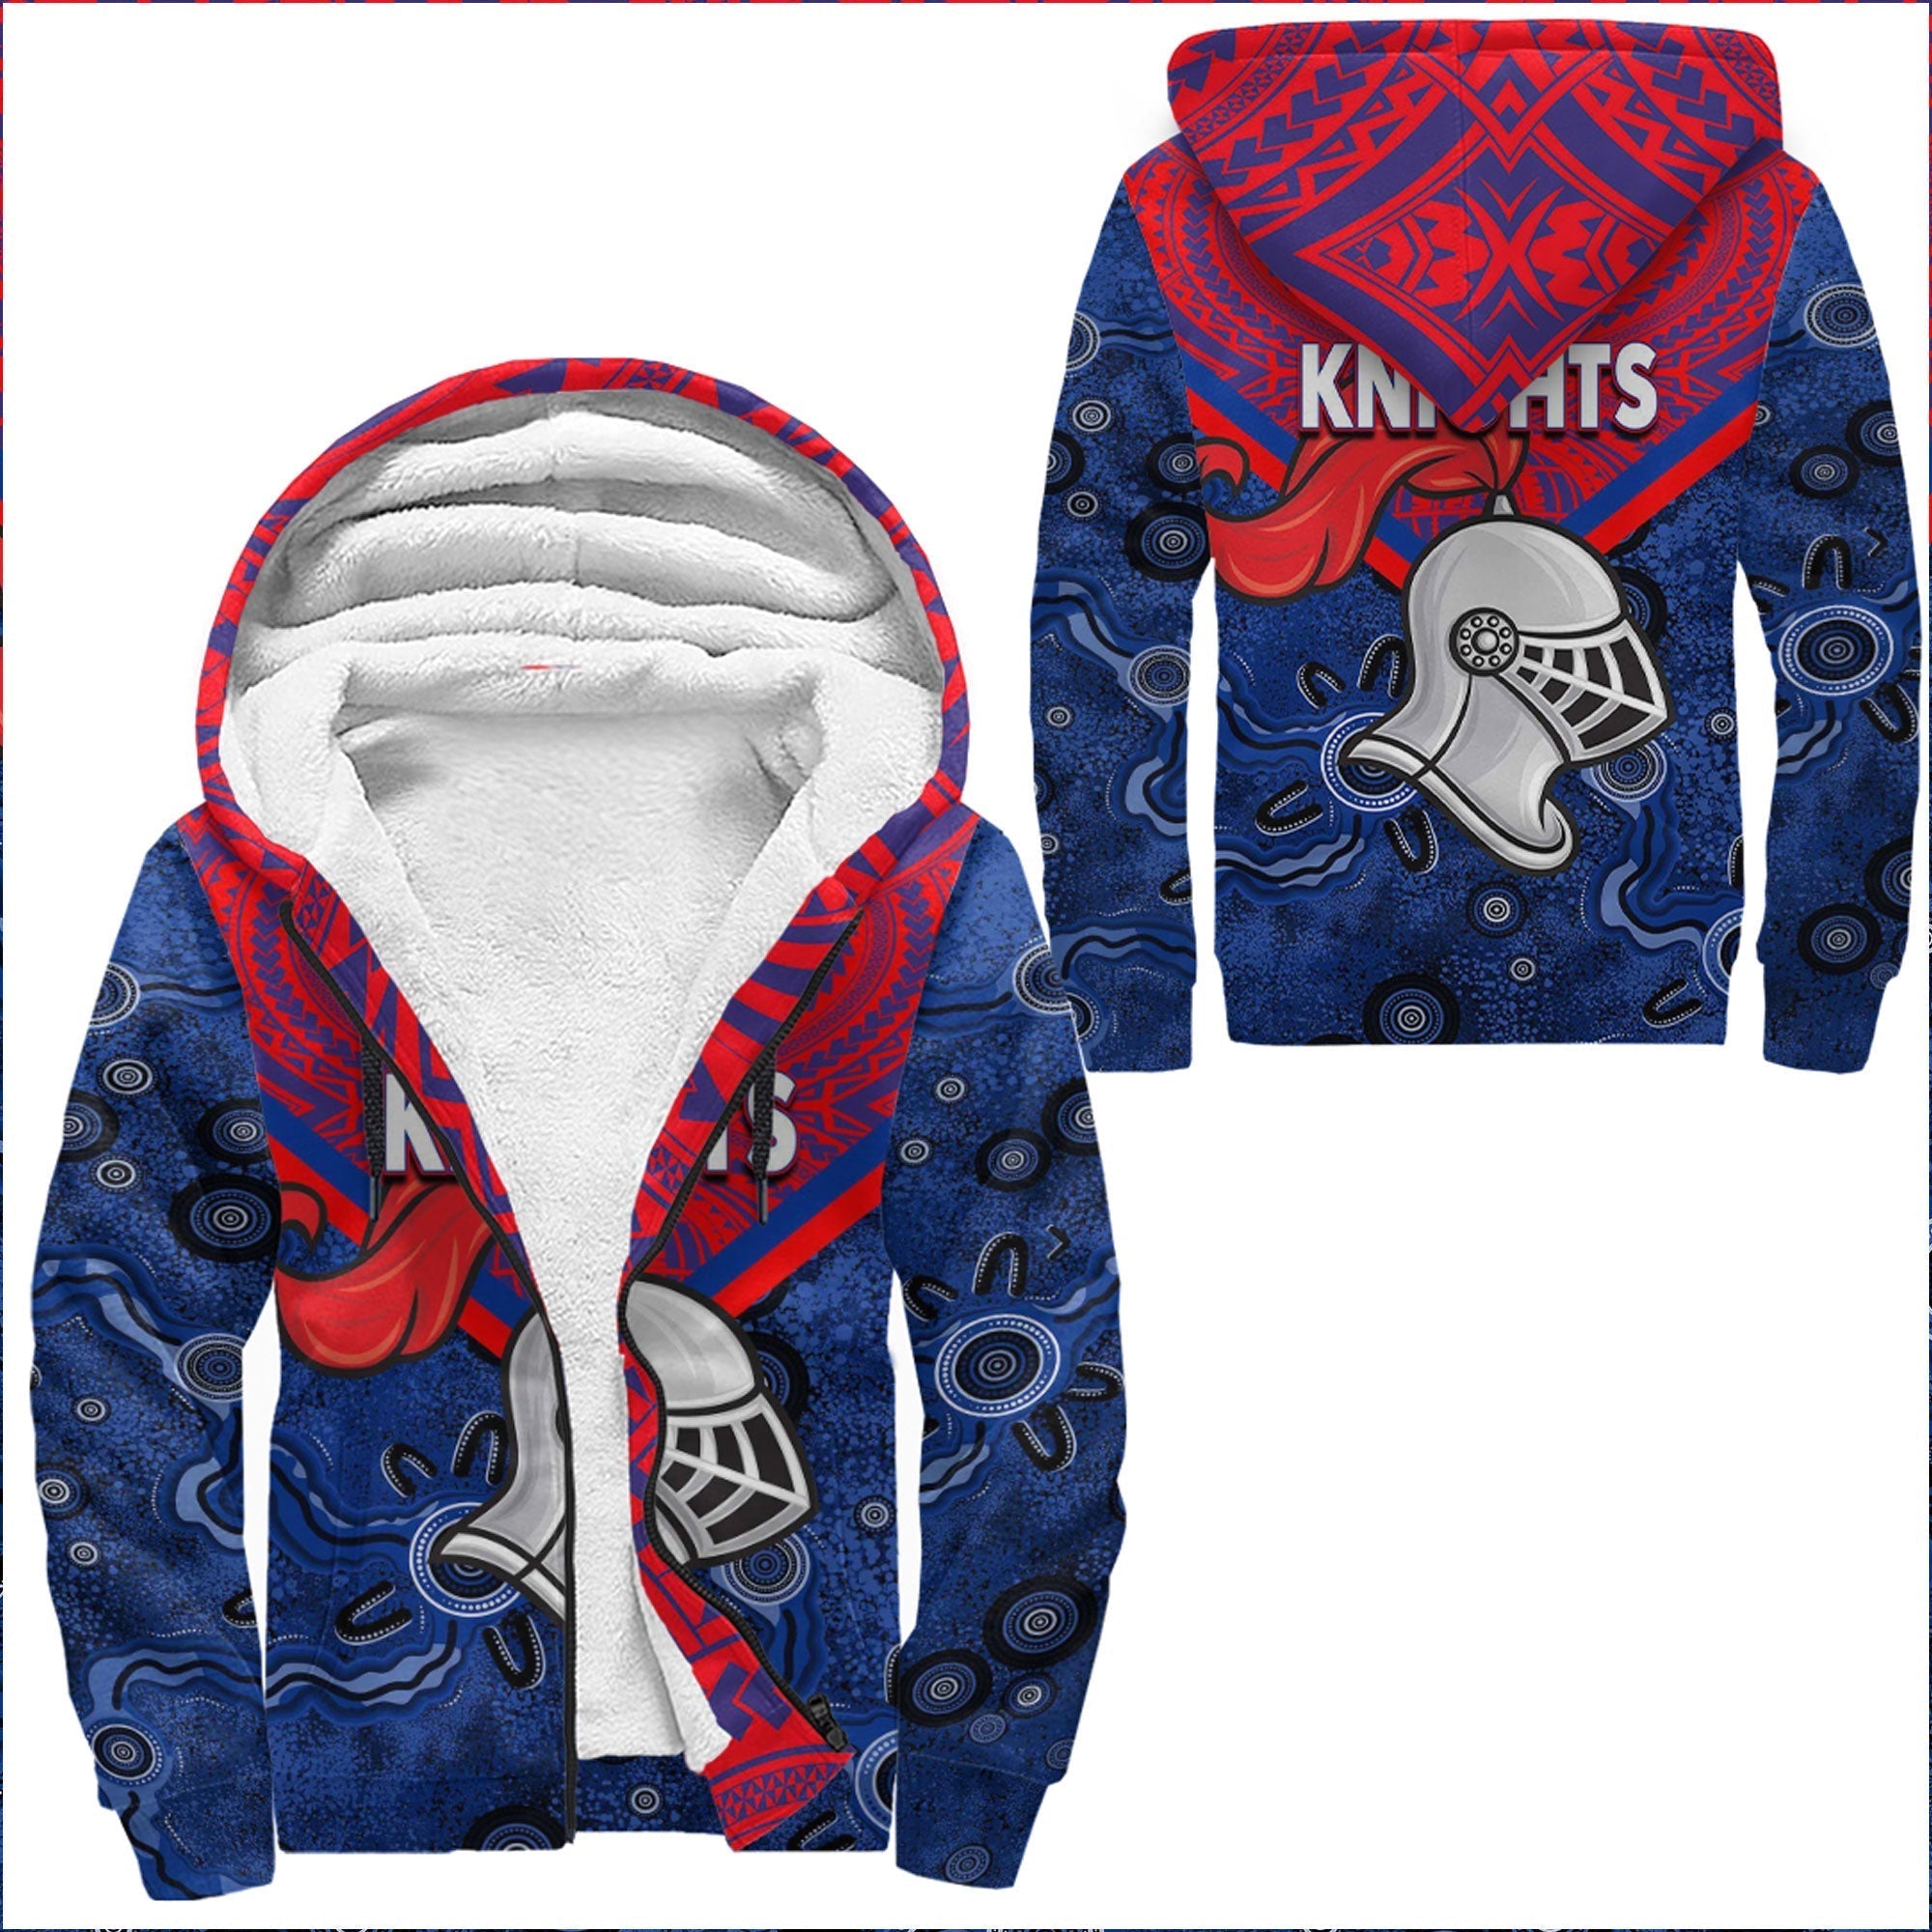 vibe-hoodie-clothing-castle-knights-aboriginal-tattoo-style-sherpa-hoodies